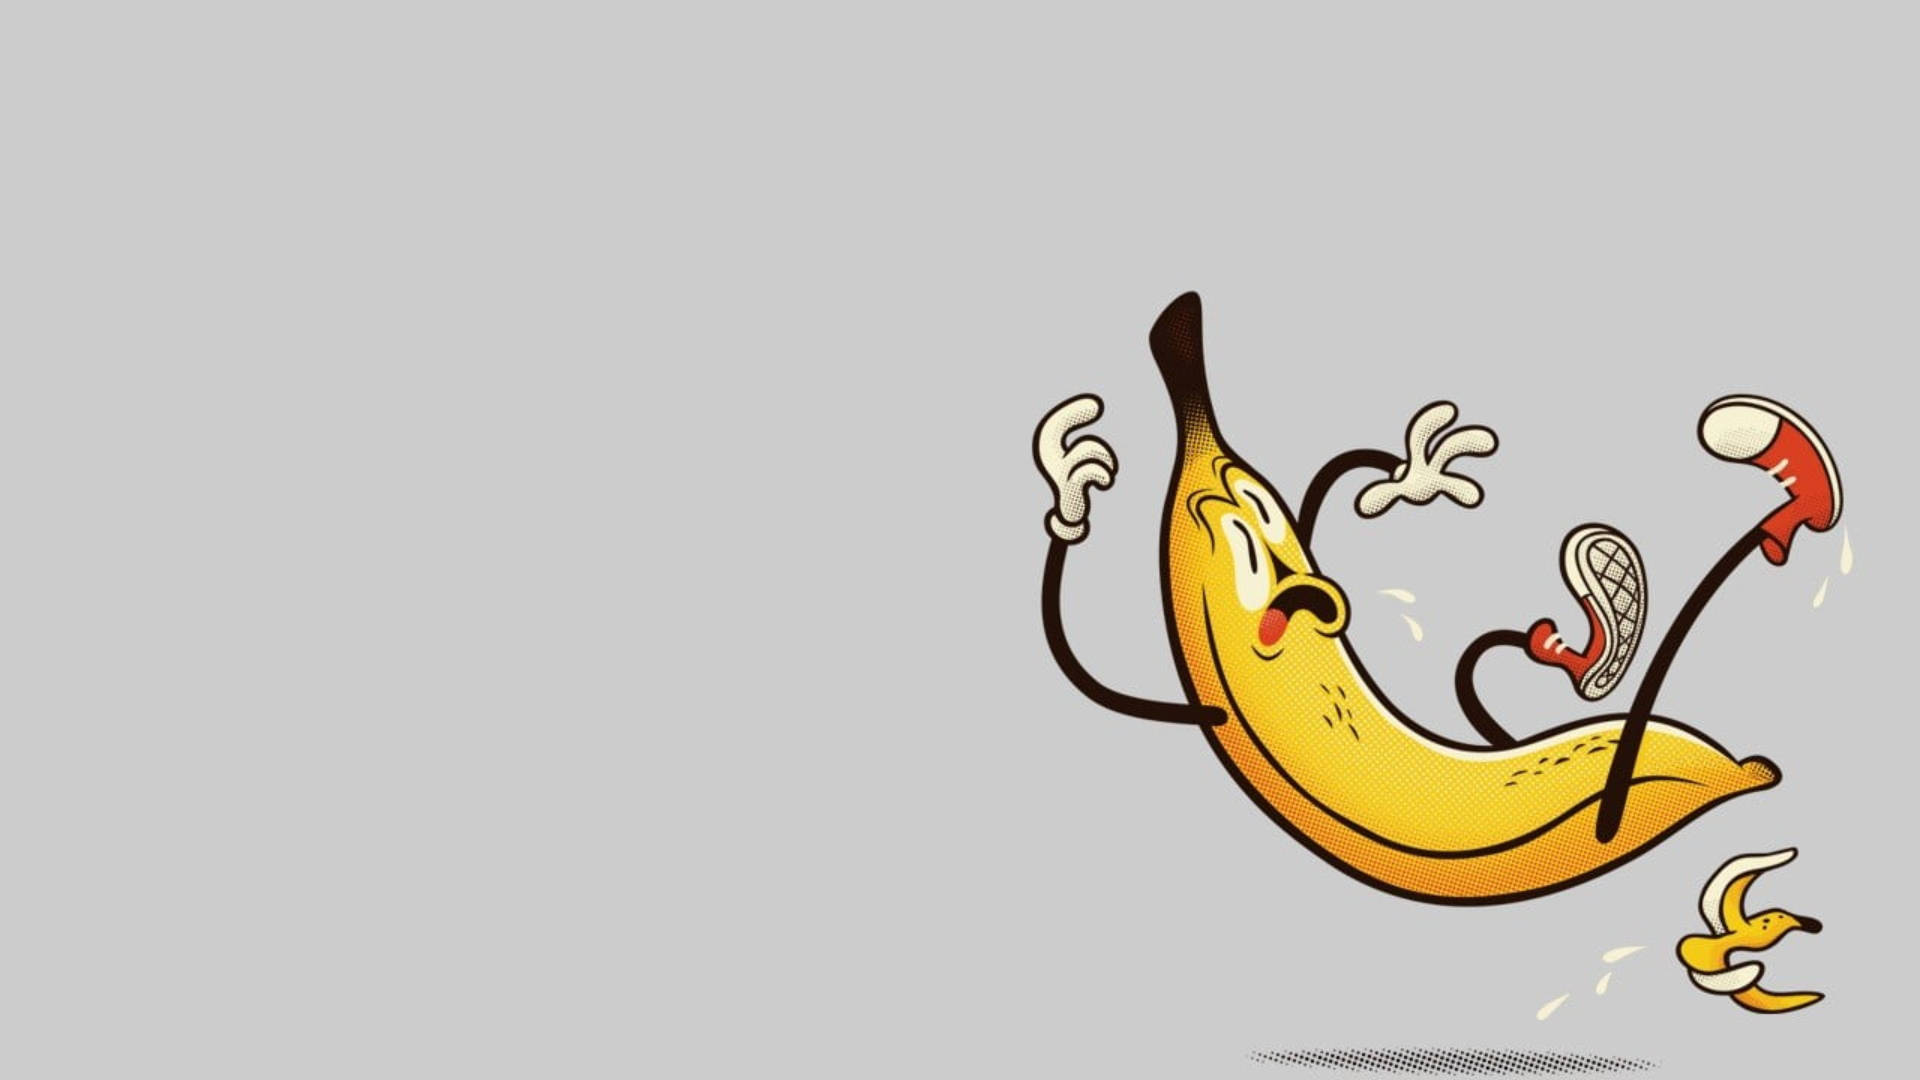 Slipping Banana Cartoon Wallpaper